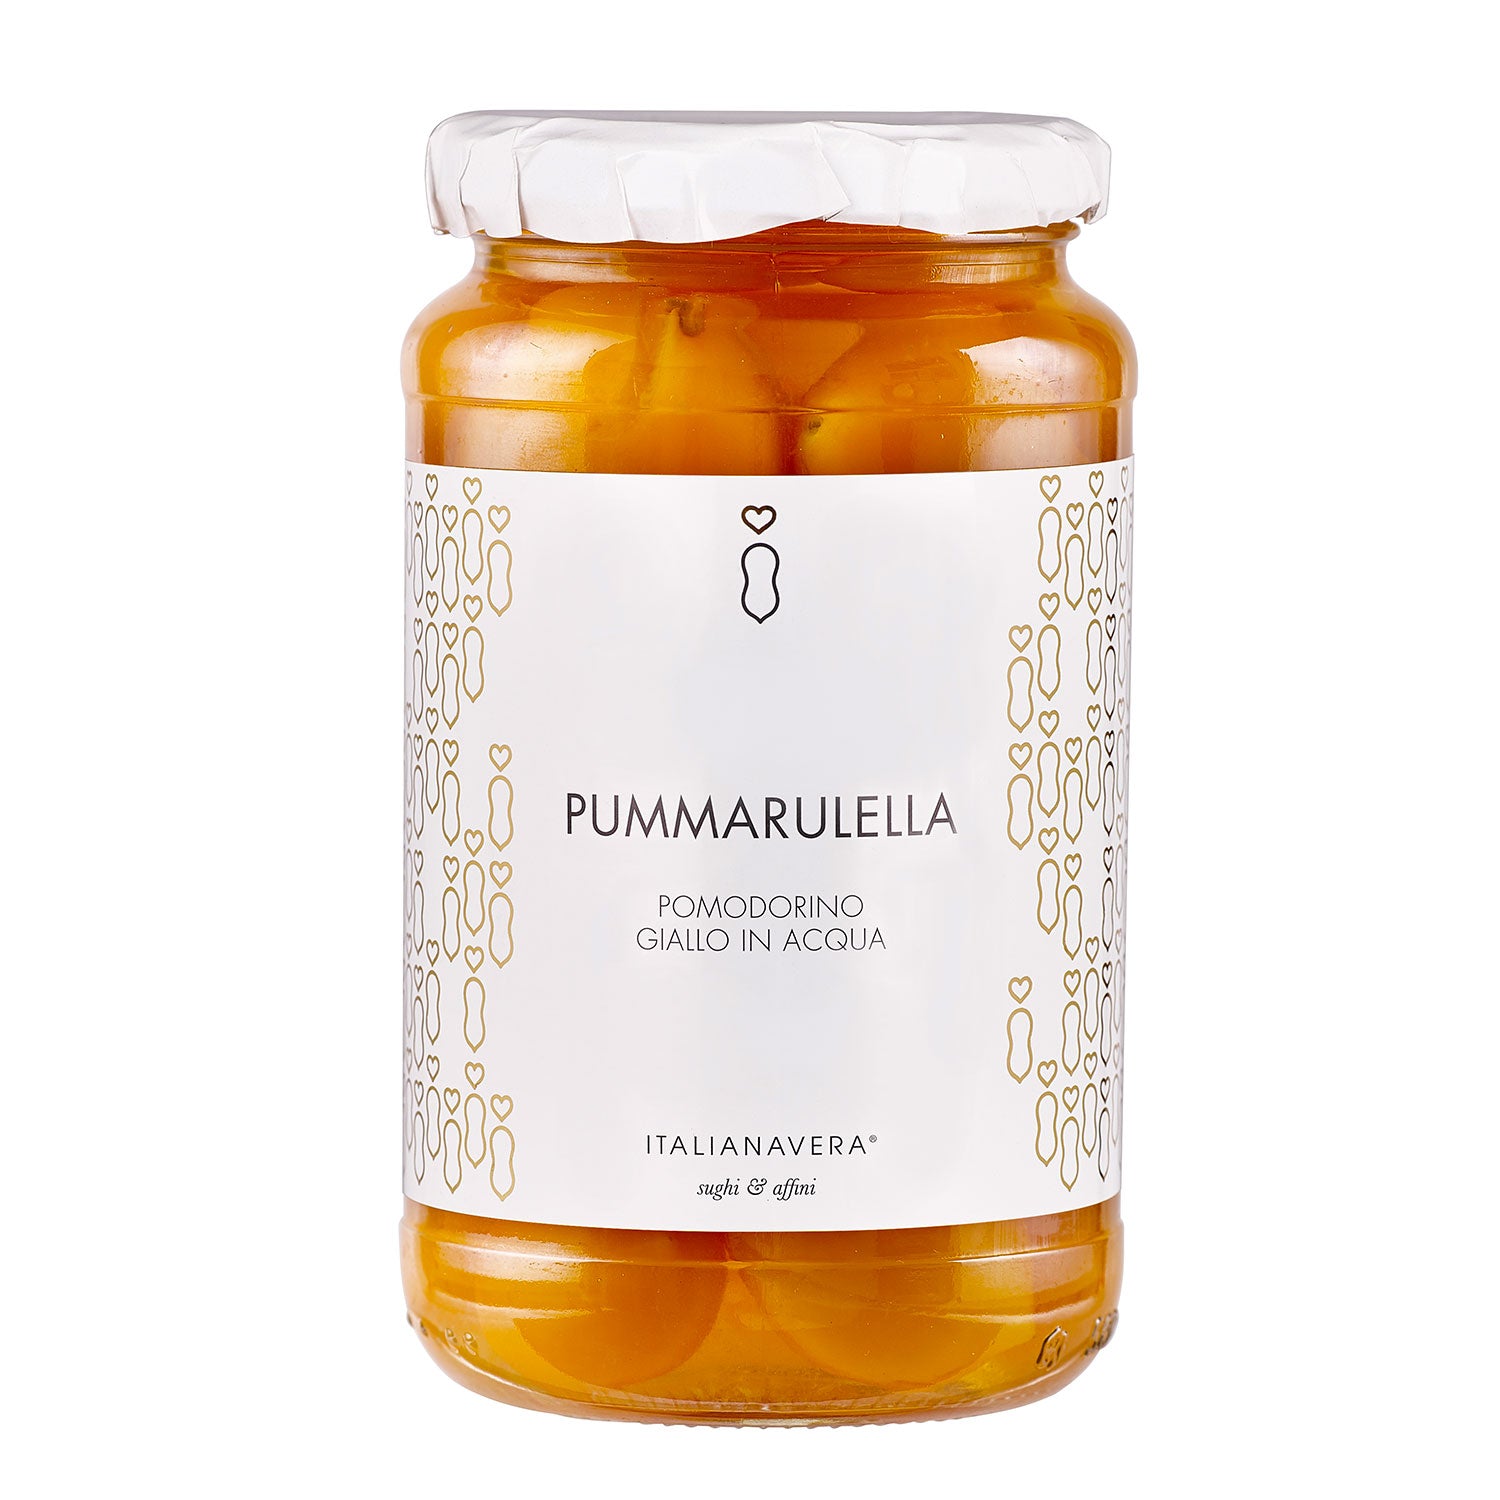 Pummarulella – Yellow Tomato in Water and Salt